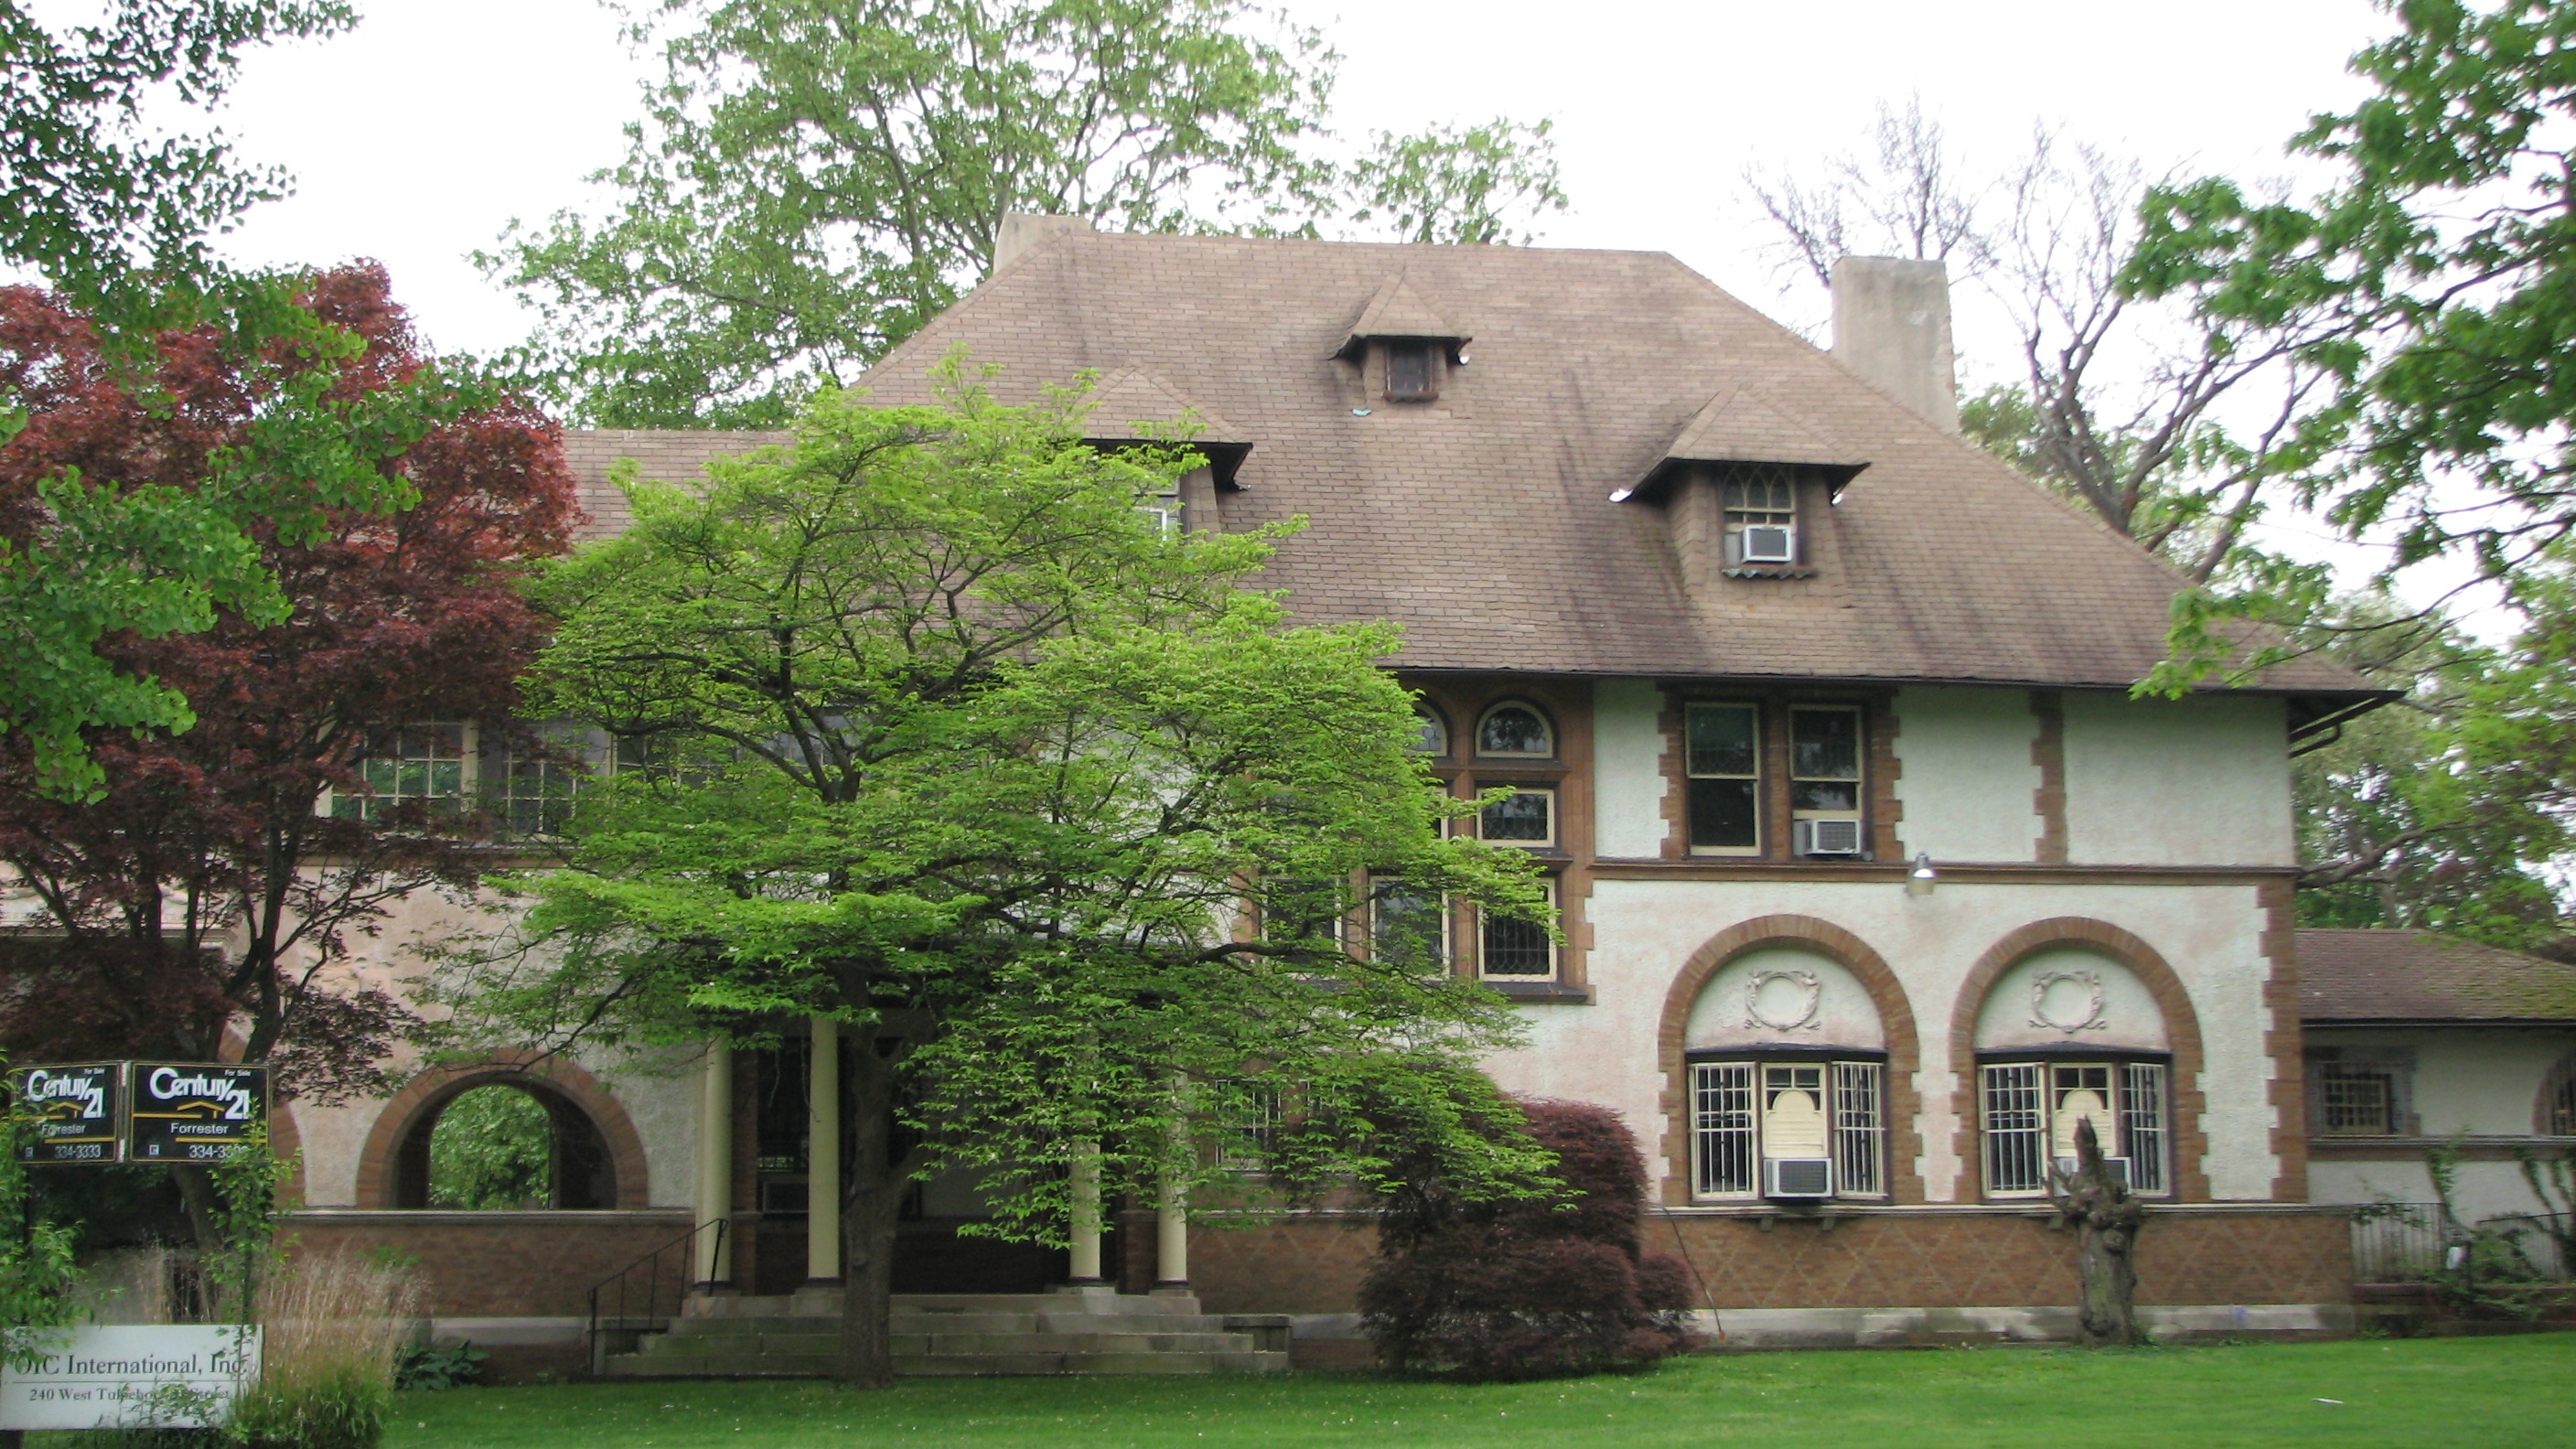 The Harry K. Cummings Residence, 240 W. Tulpehocken St. in Germantown, blends a variety of European styles.